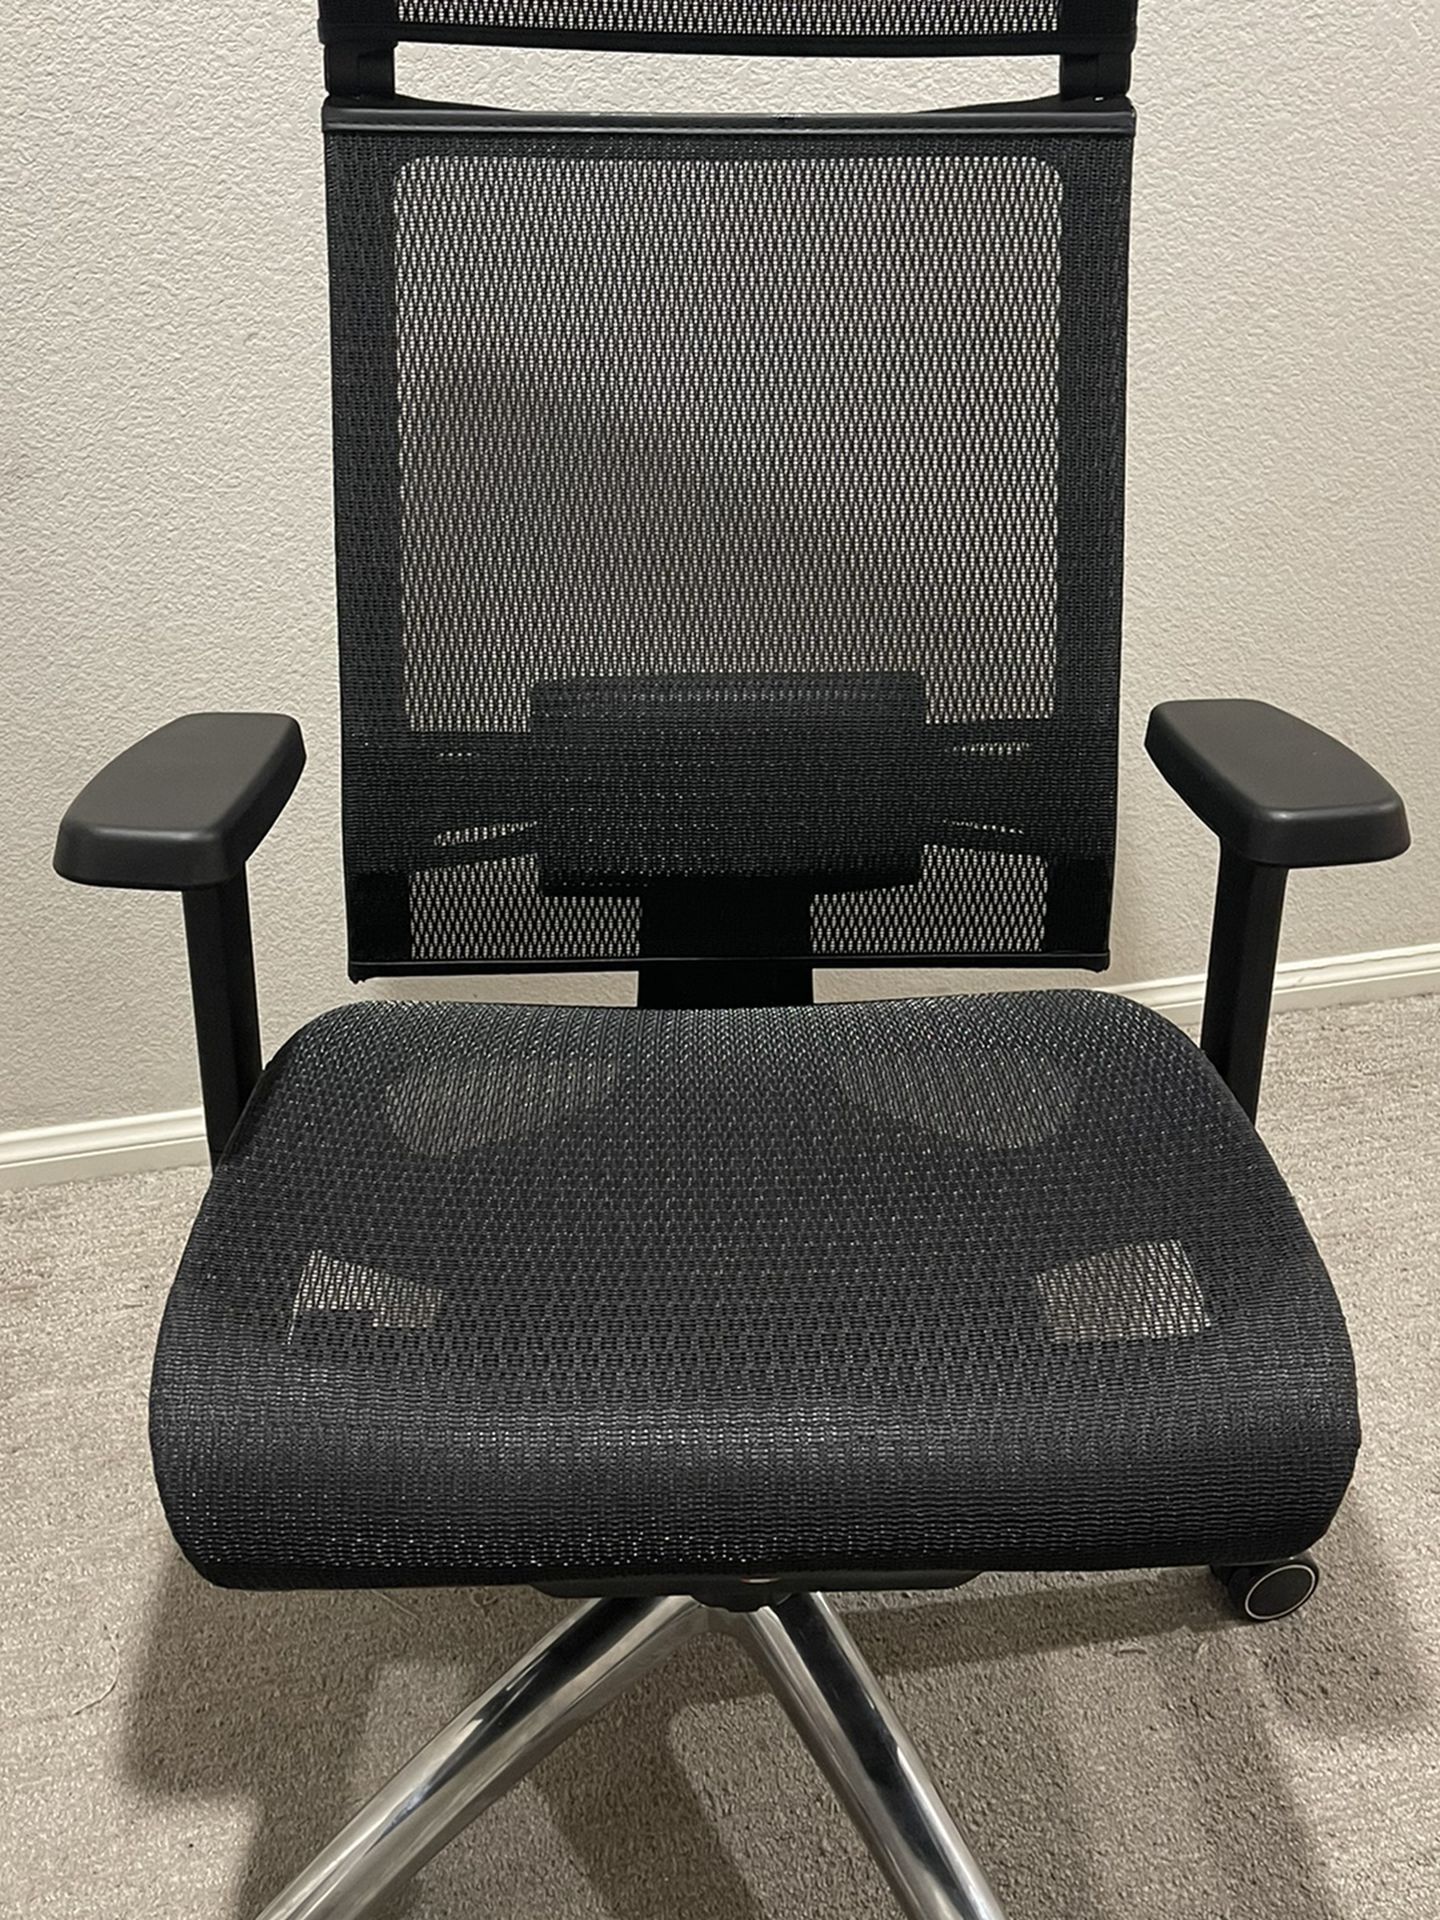 Bilkoh Ergonomic High Back Office Gaming Chair